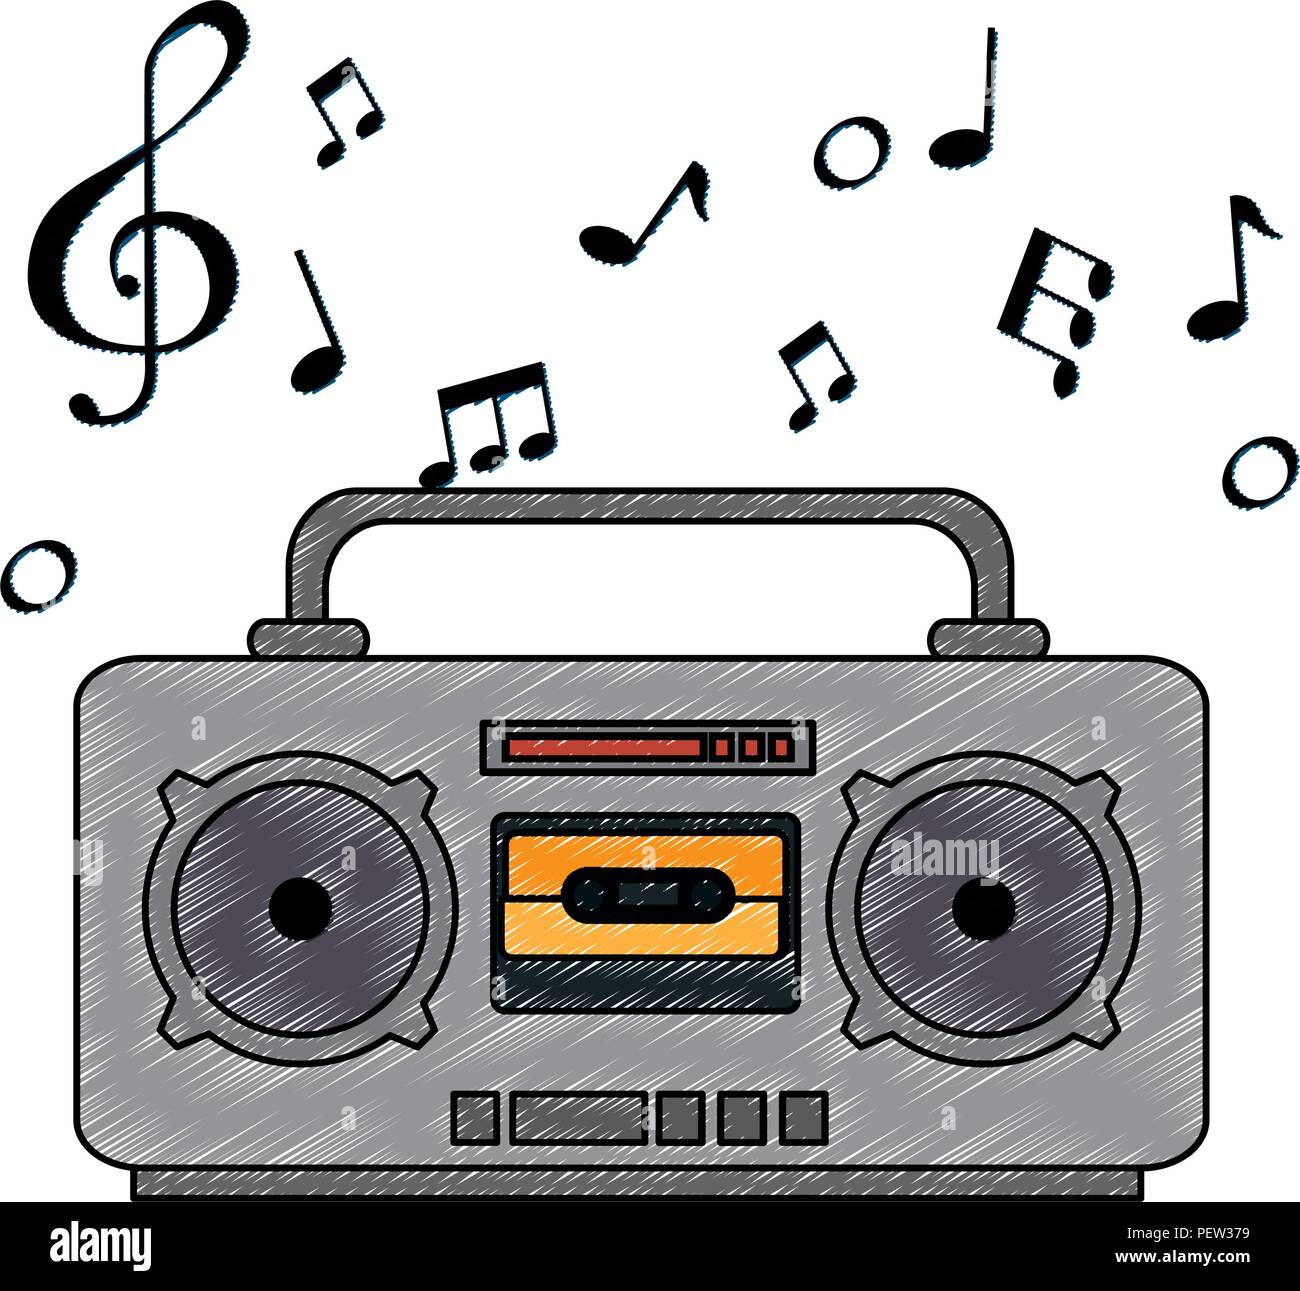 Radio Music Player mit Noten Vector Illustration Design Stock-Vektorgrafik  - Alamy